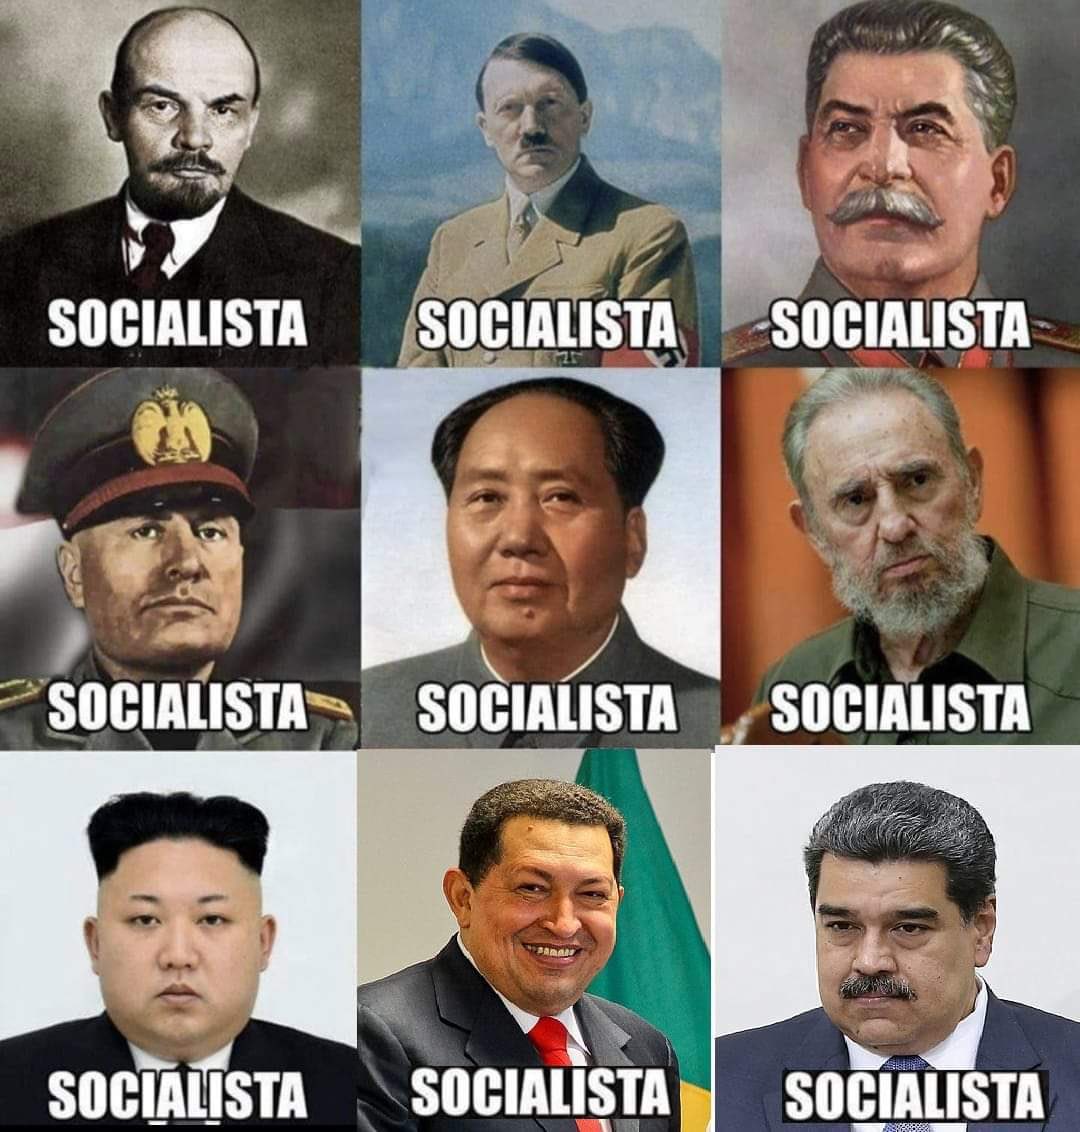 Socialista tenía. Q ser #ComunismoEsMiseriaHambreYMuerte #ProscribirAlPartidoComunista #UltraIzquierda